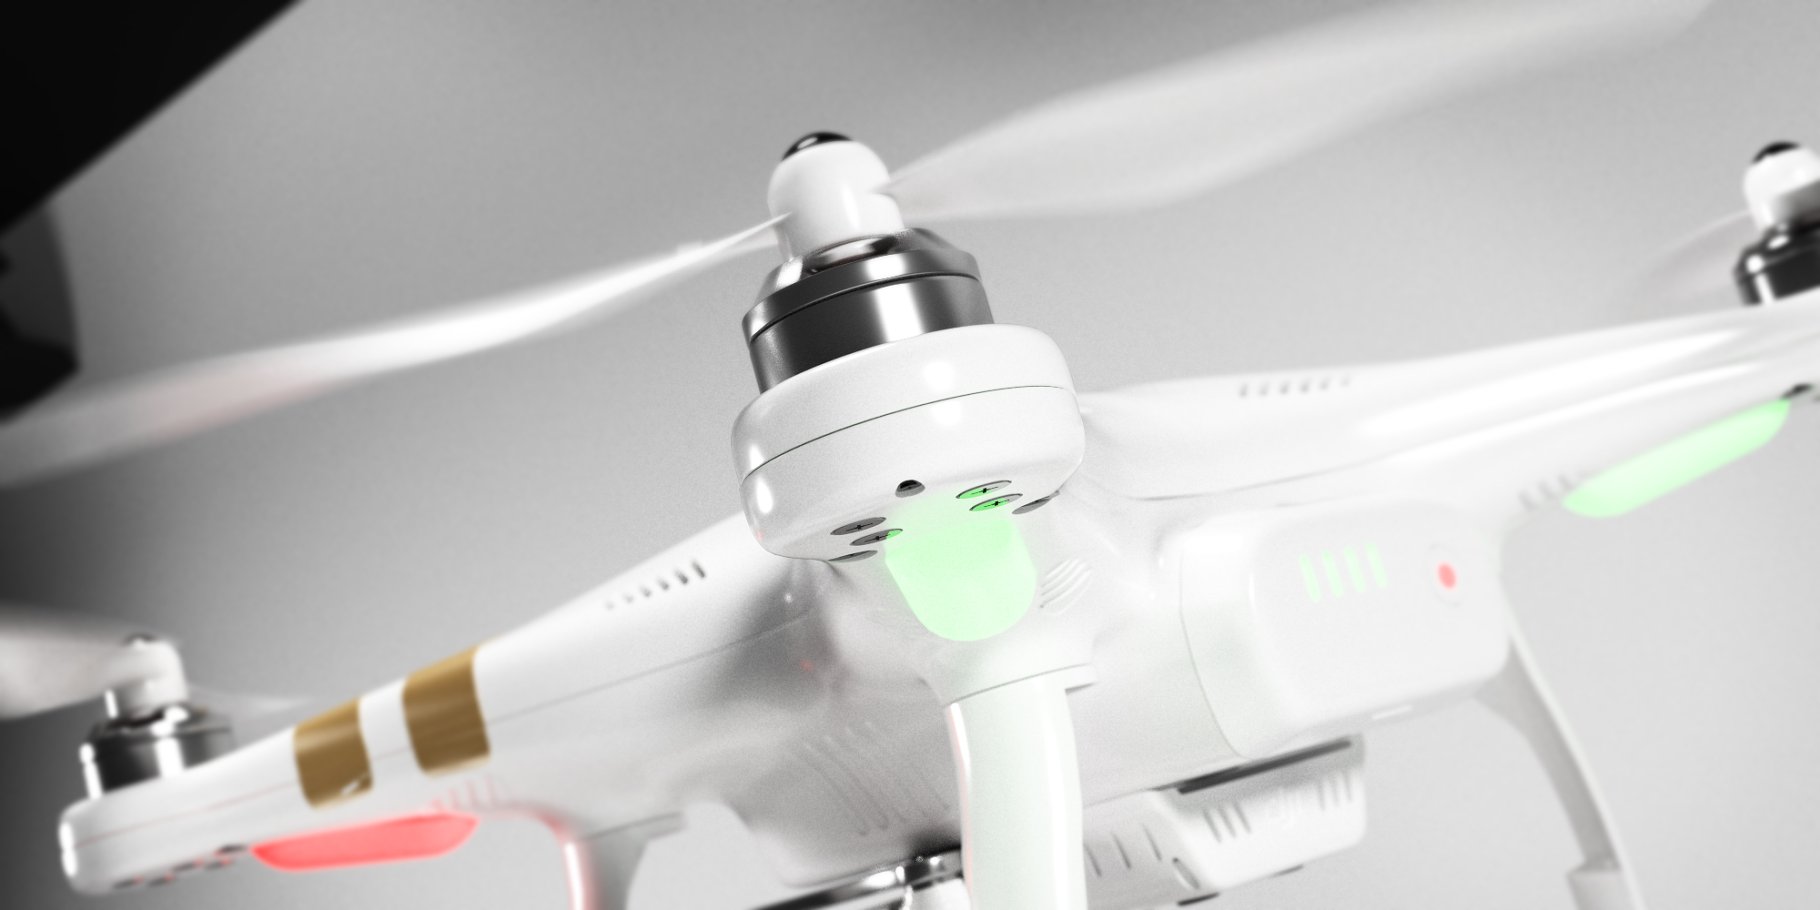 Gorgeous rendering of a white DJI Phantom 3 drone